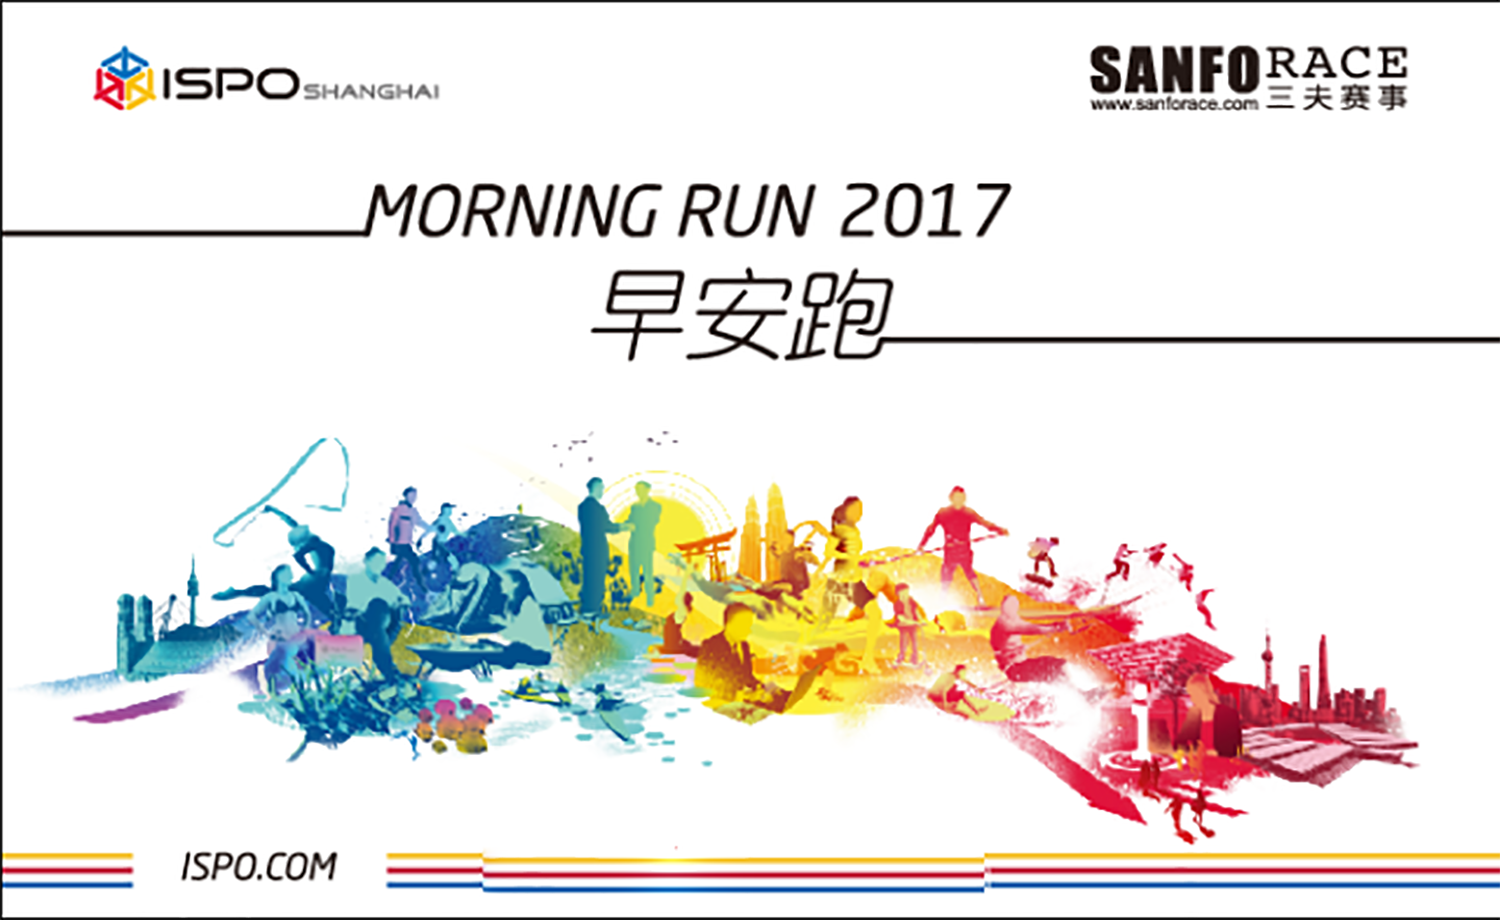  2017 “MORNING RUN 早安跑